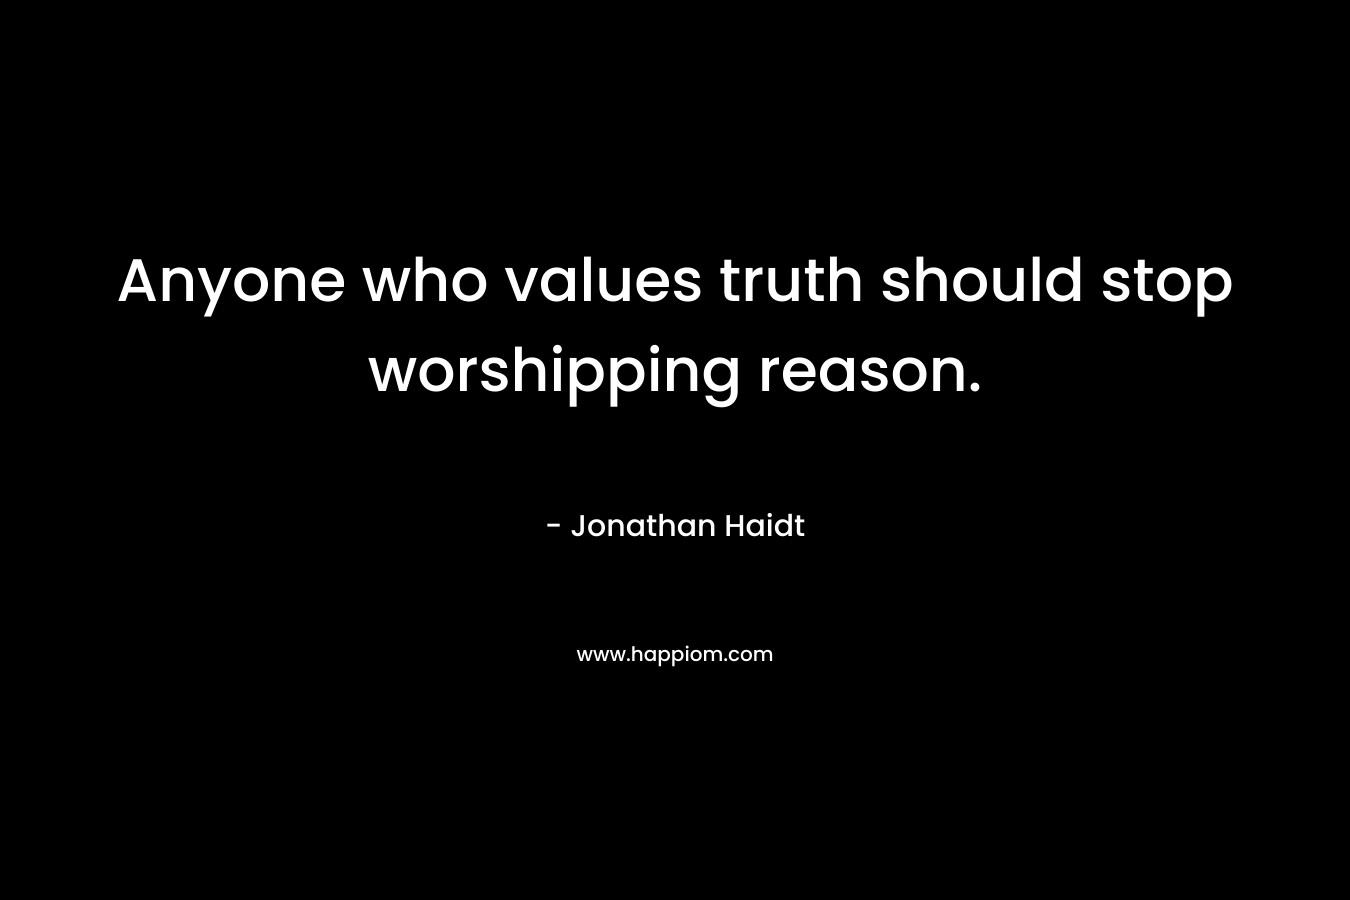 Anyone who values truth should stop worshipping reason.